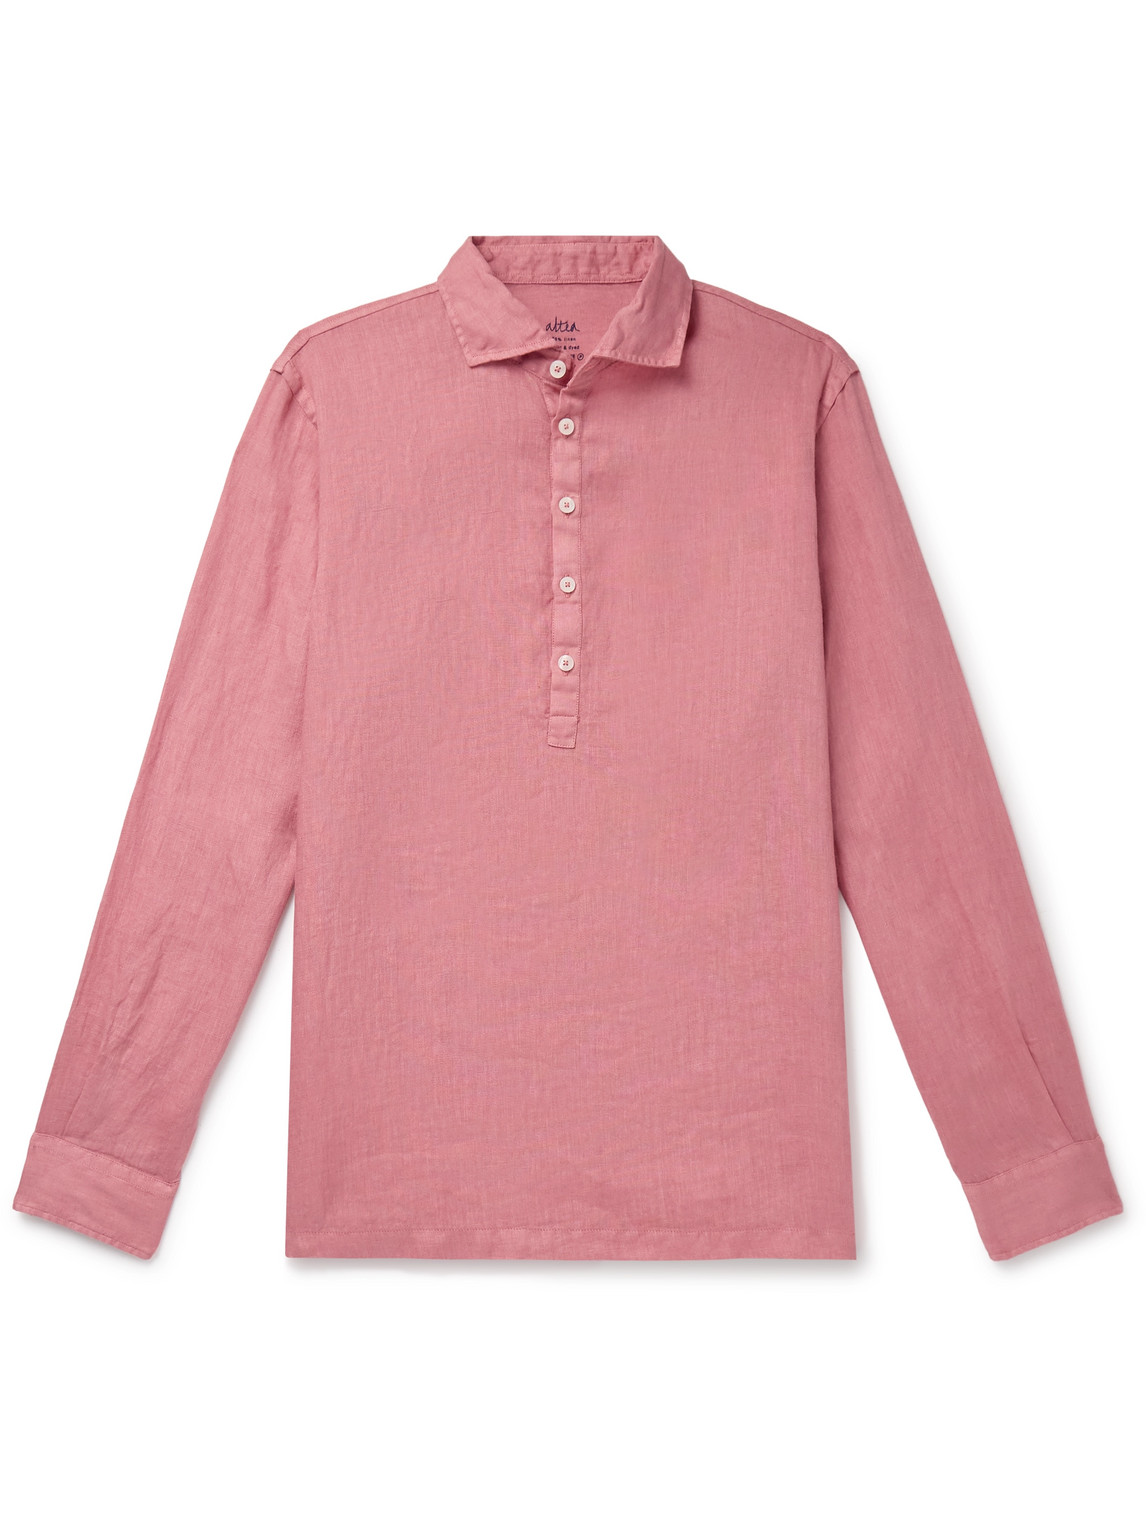 Altea - Tyler Garment-Dyed Linen Half-Placket Shirt - Men - Pink - M von Altea